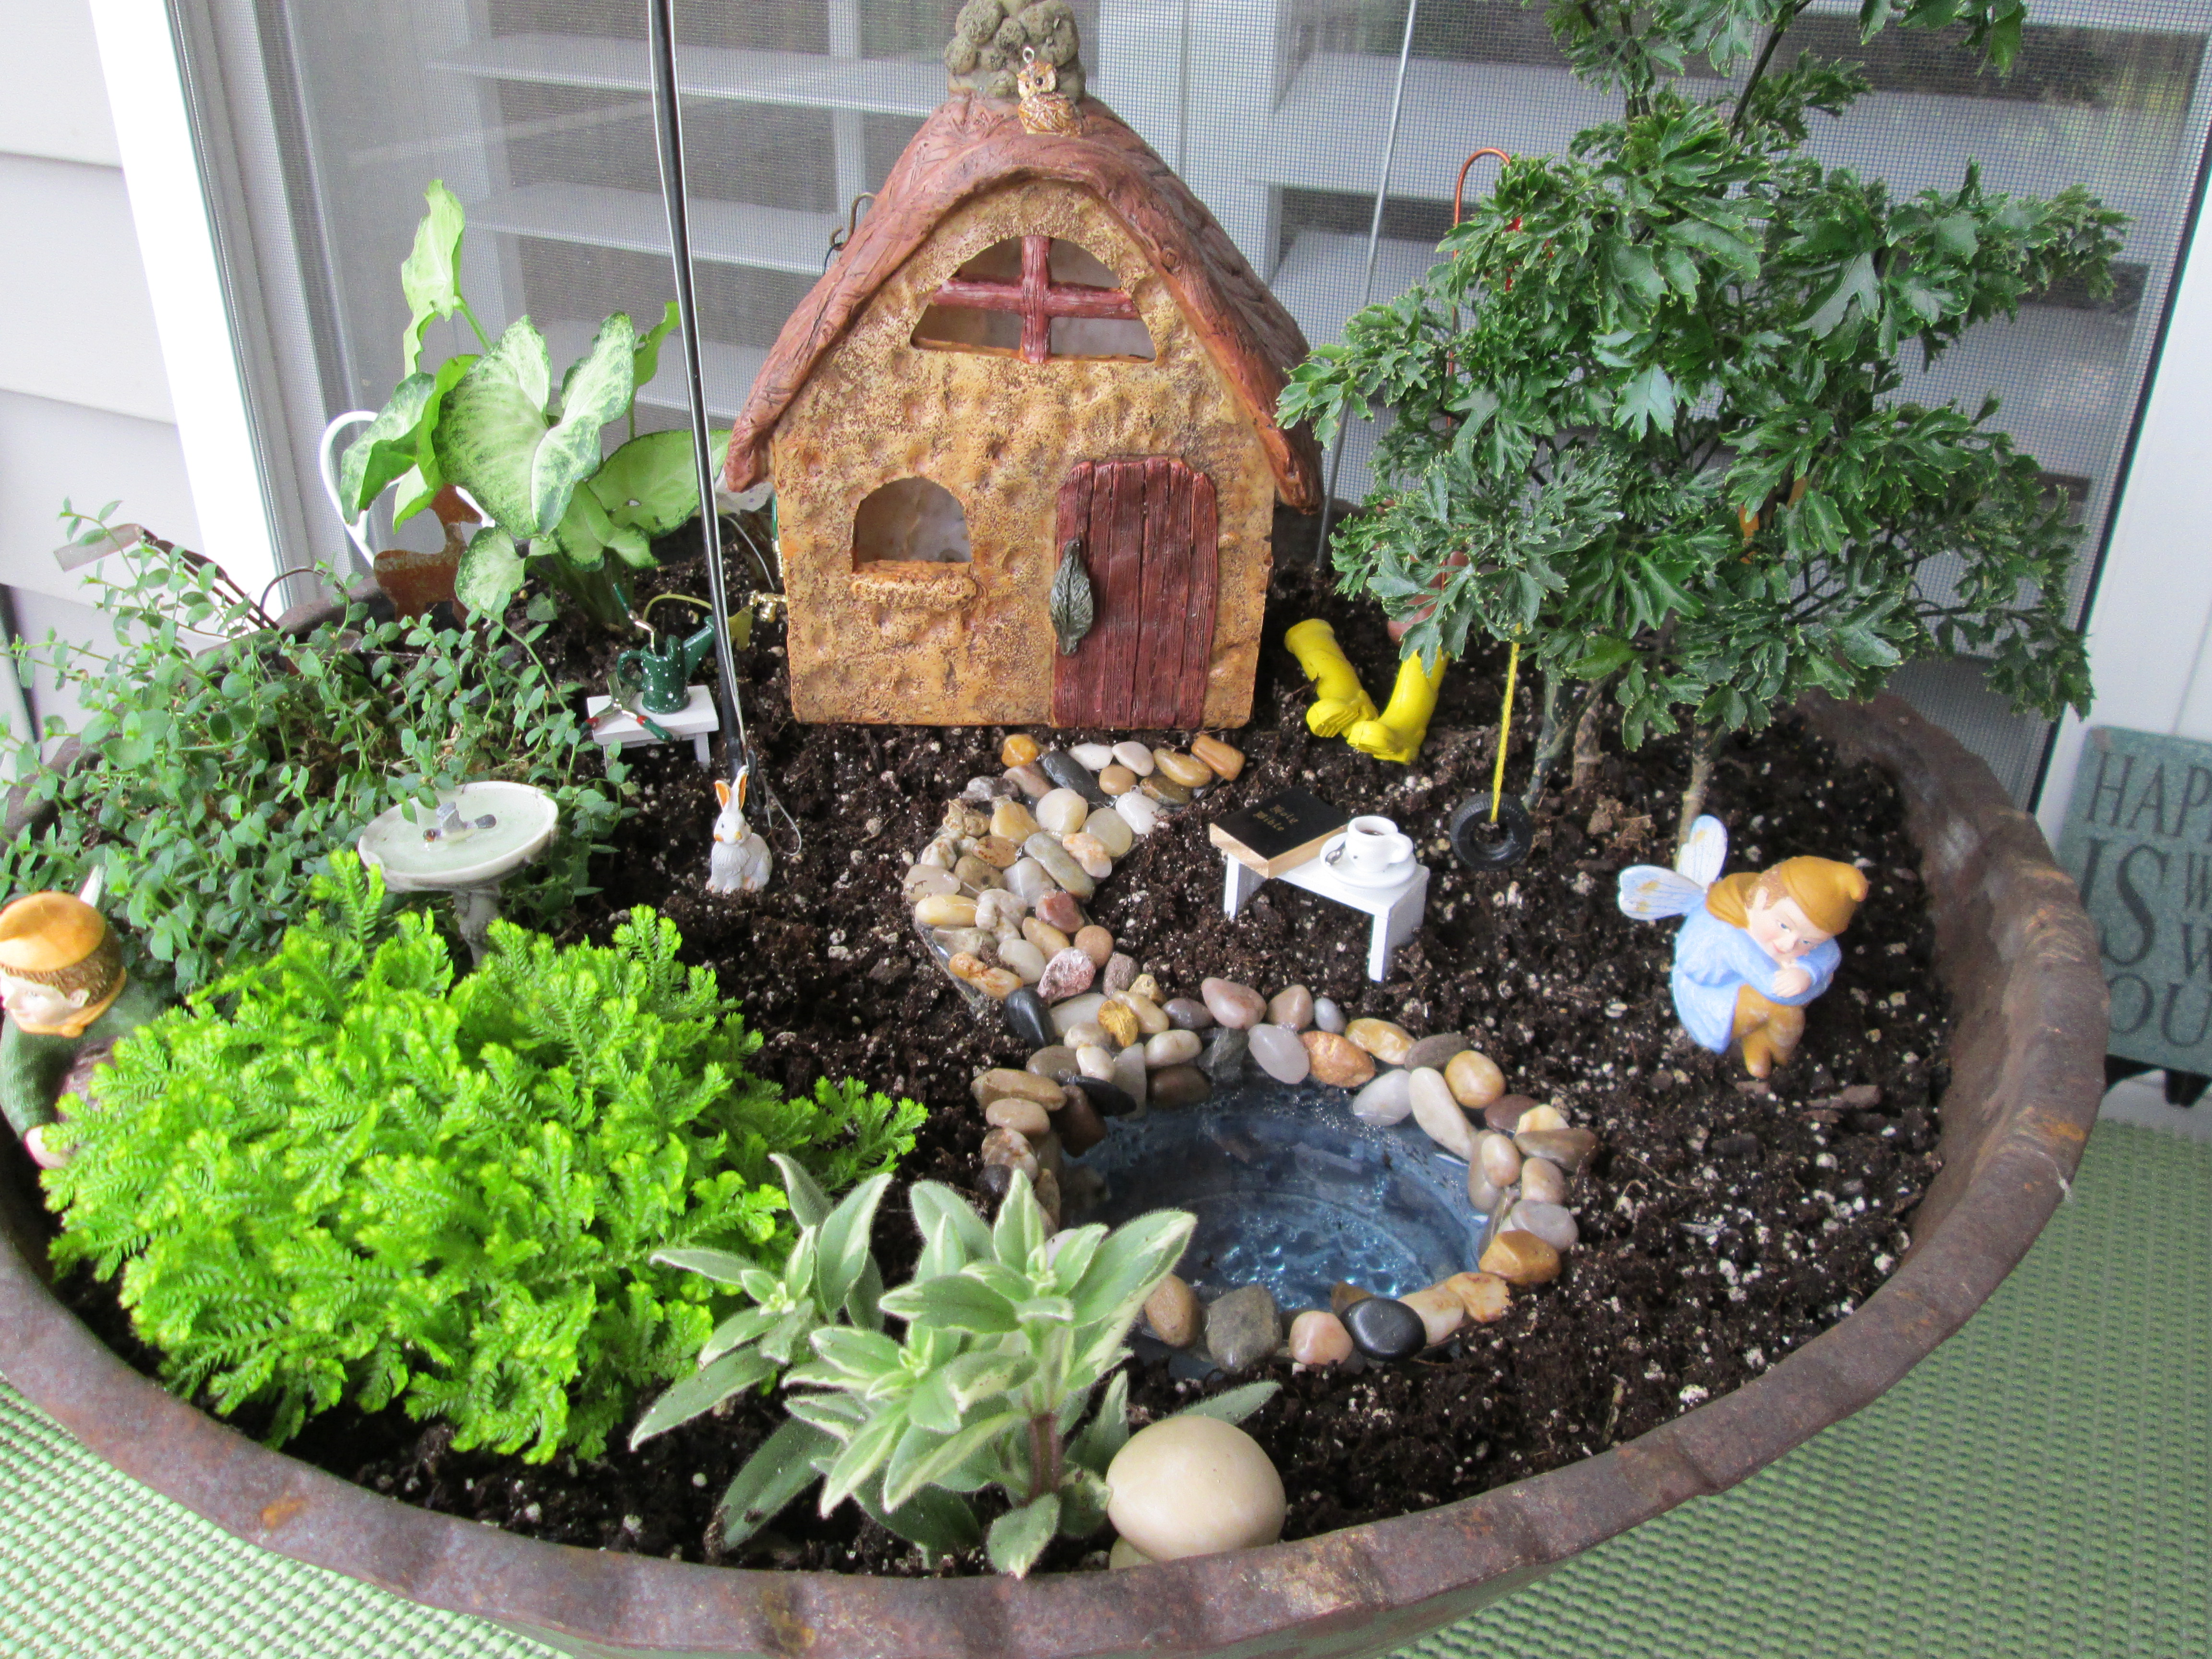  diy garden ideas for kids